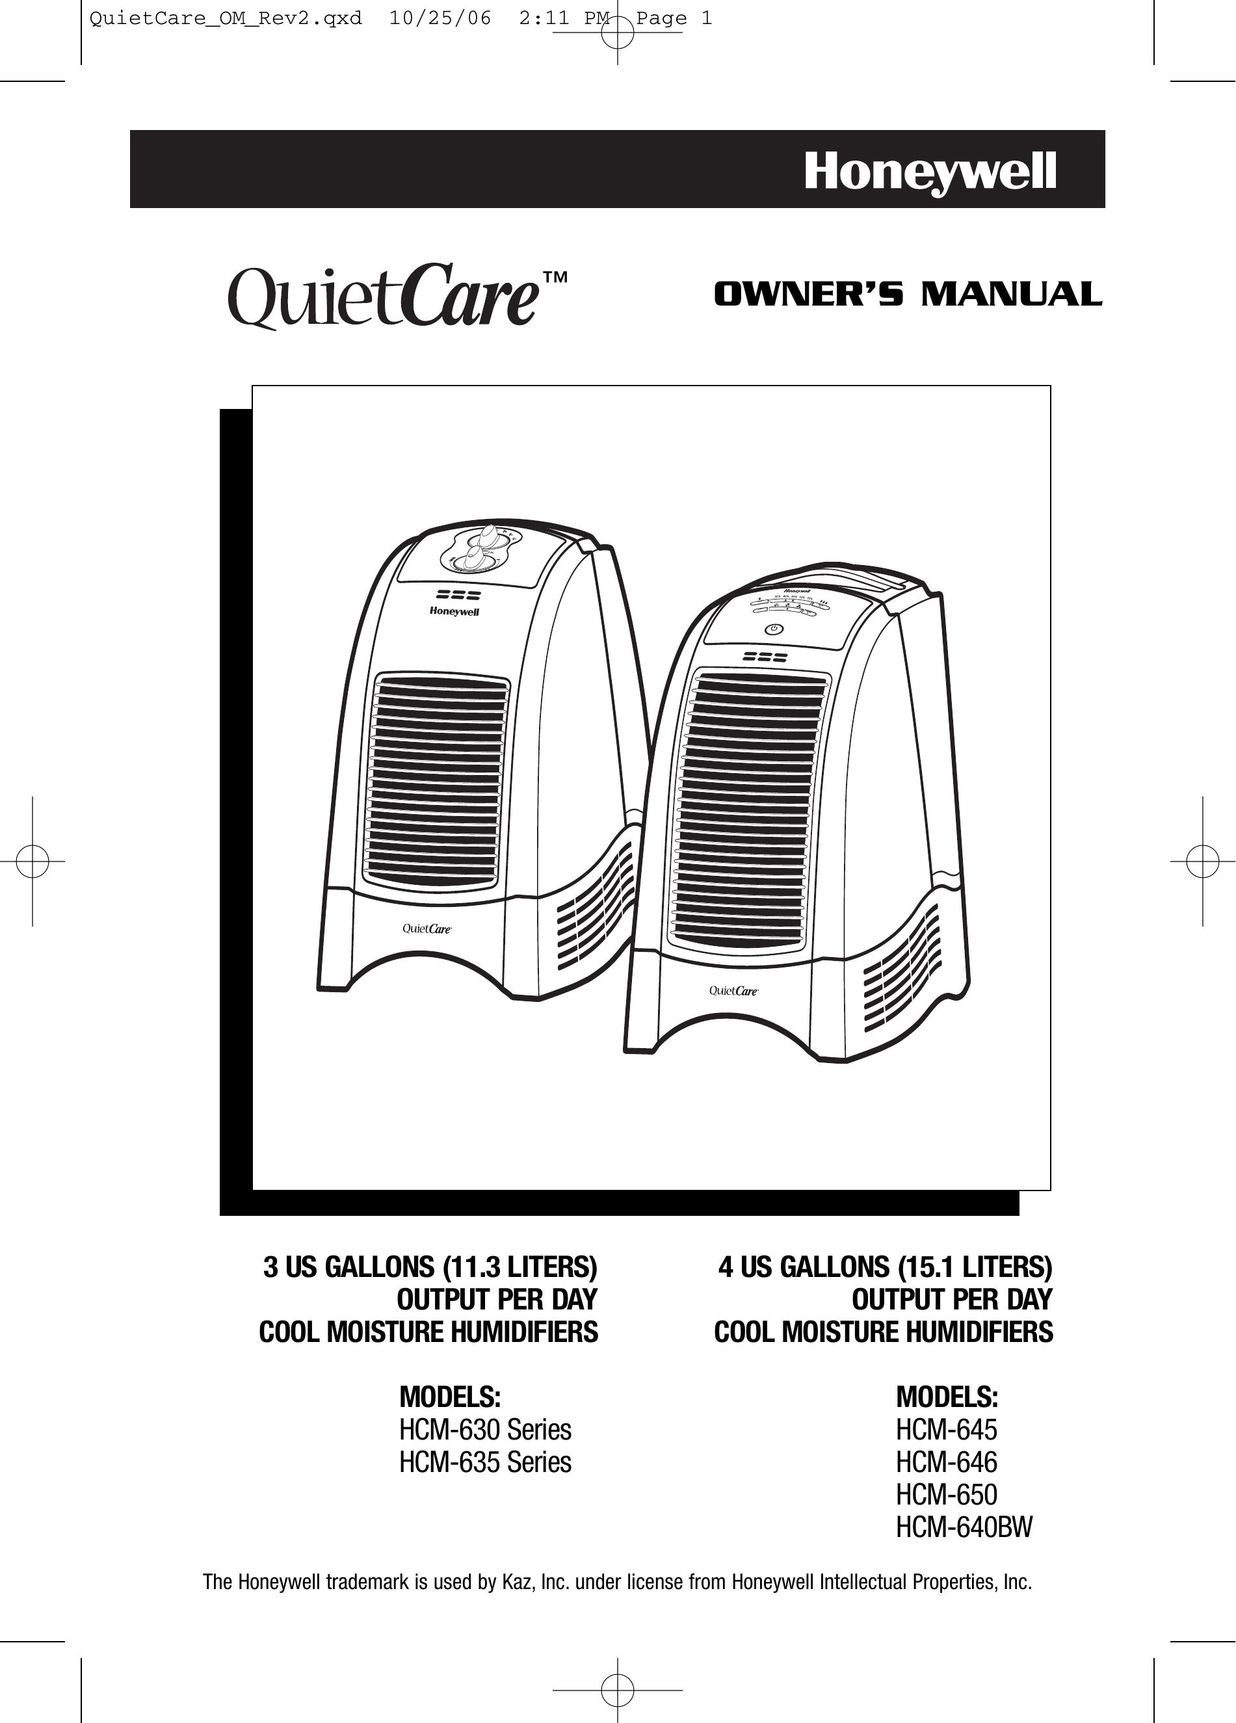 Honeywell HCM-630 Series Humidifier User Manual